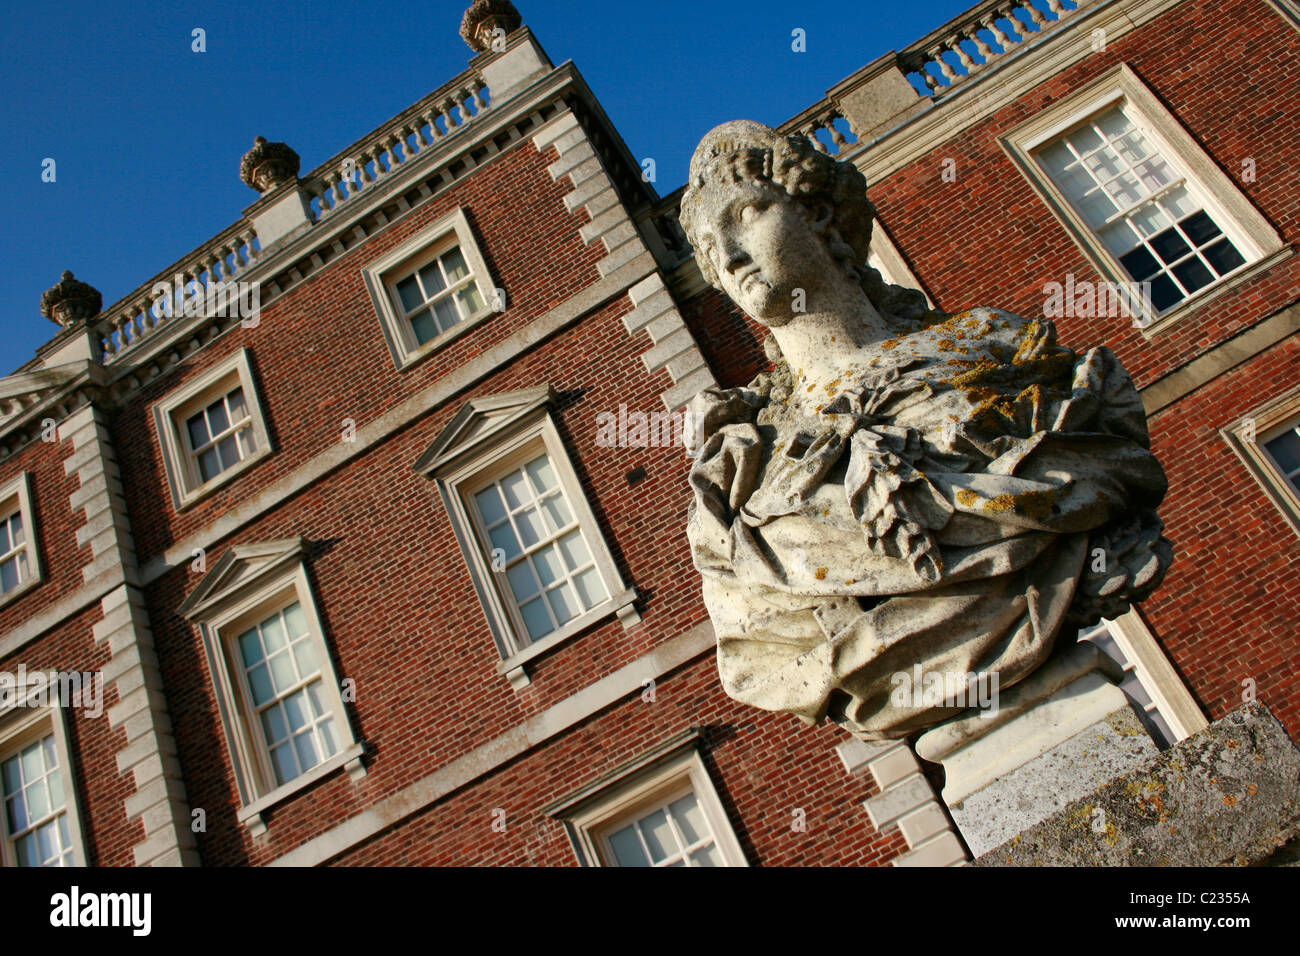 The impressive Georgian mansion of Wimpole Hall, home to Elsie Bambridge (daughter of Rudyard Kipling) Stock Photo